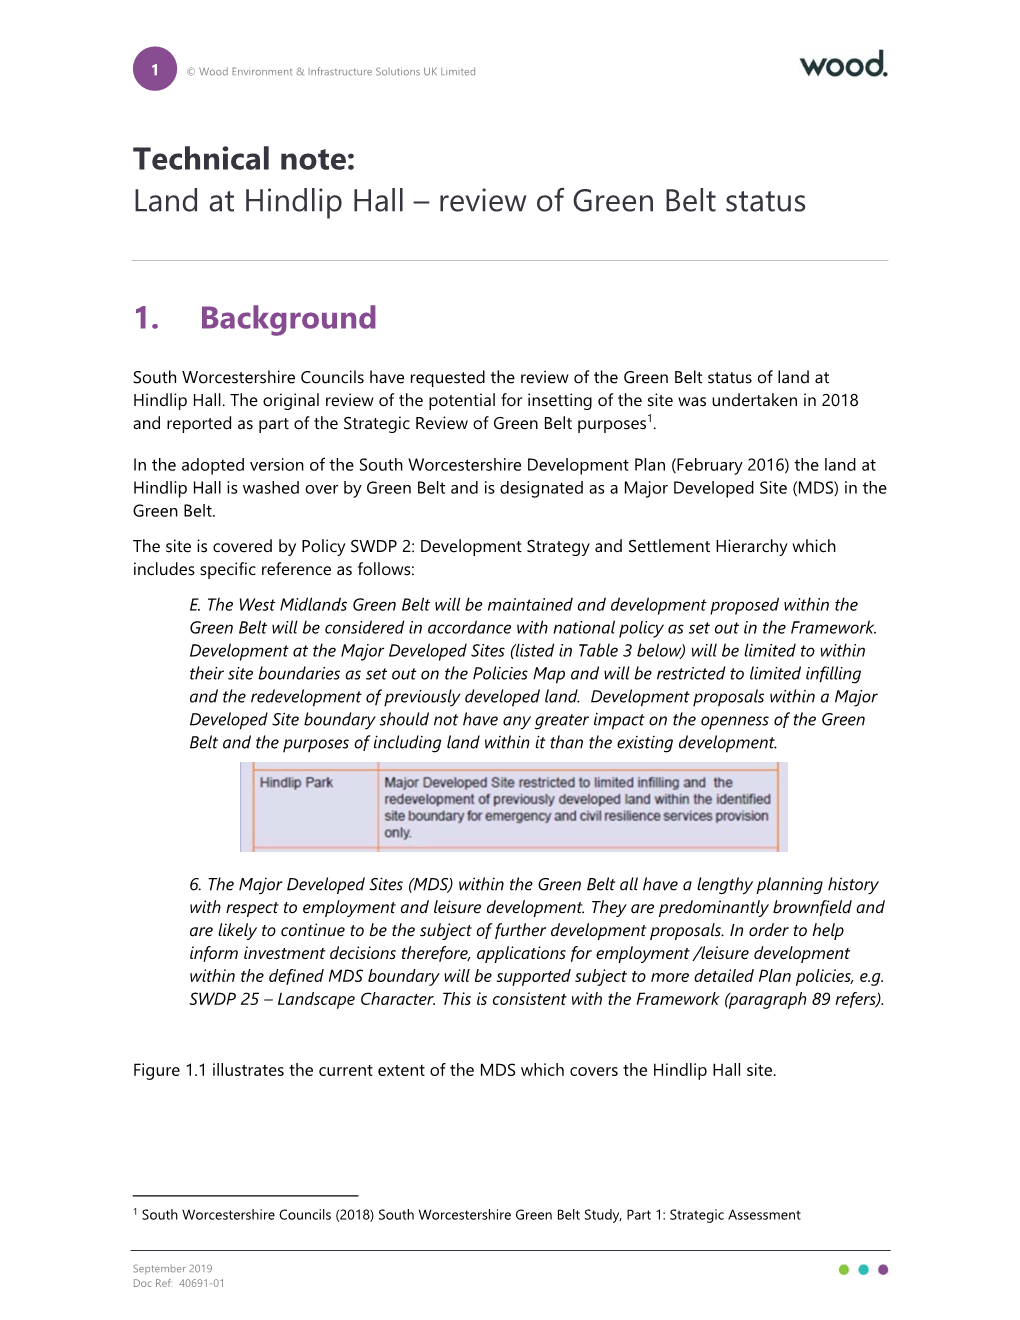 Land at Hindlip Hall – Review of Green Belt Status